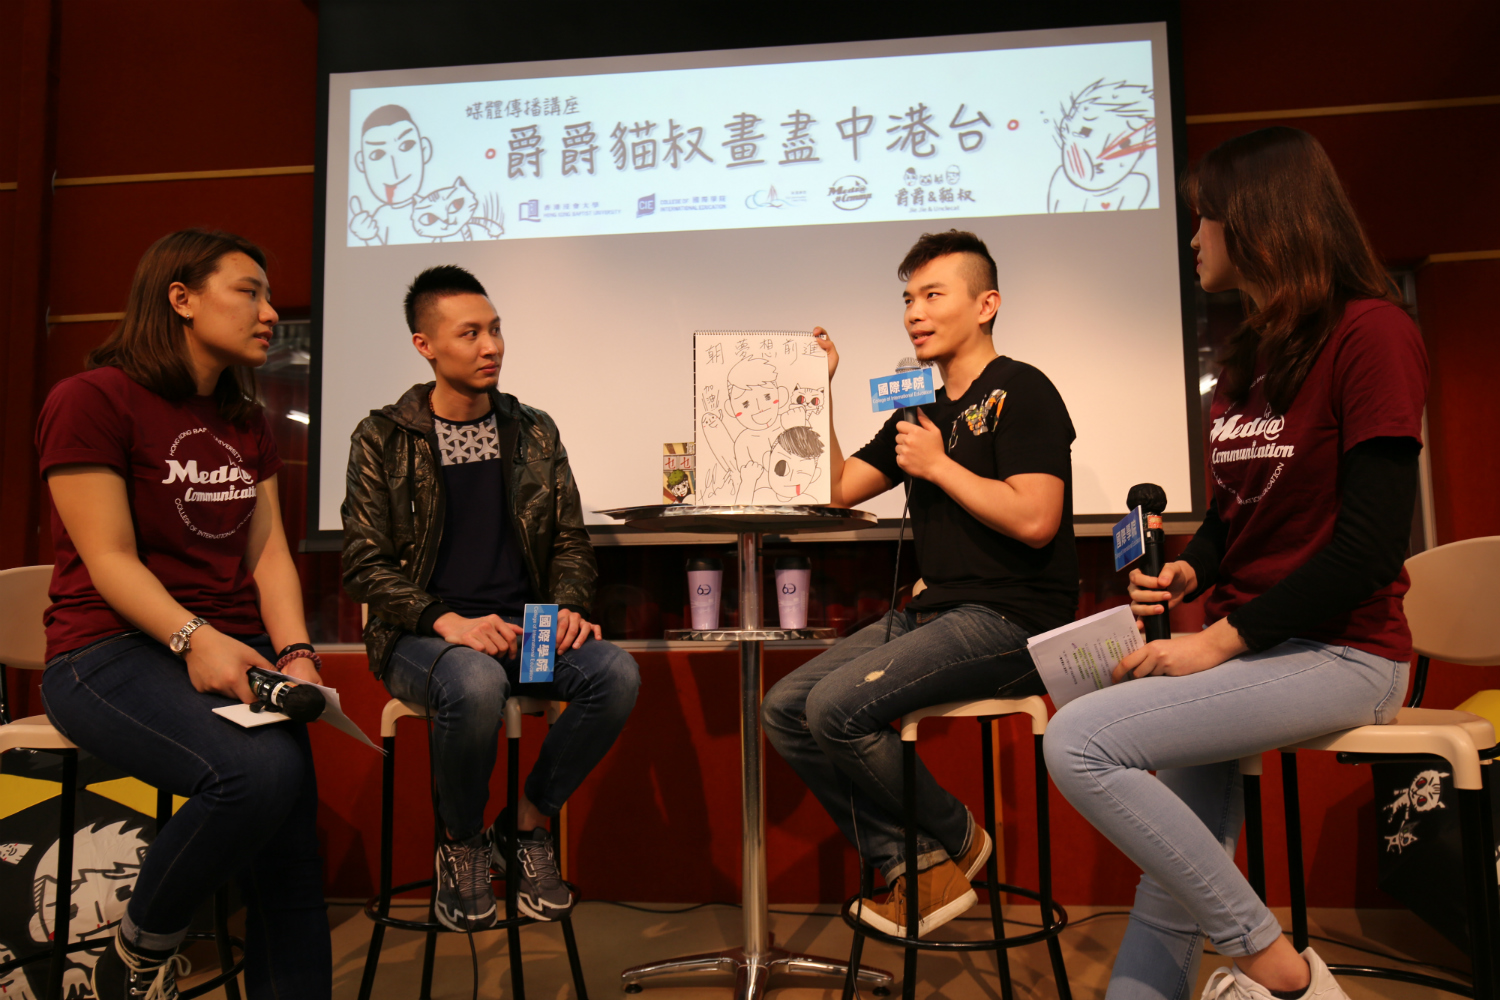 Famous illustrators JieJie and Unclecat speak at Media Communication Talk